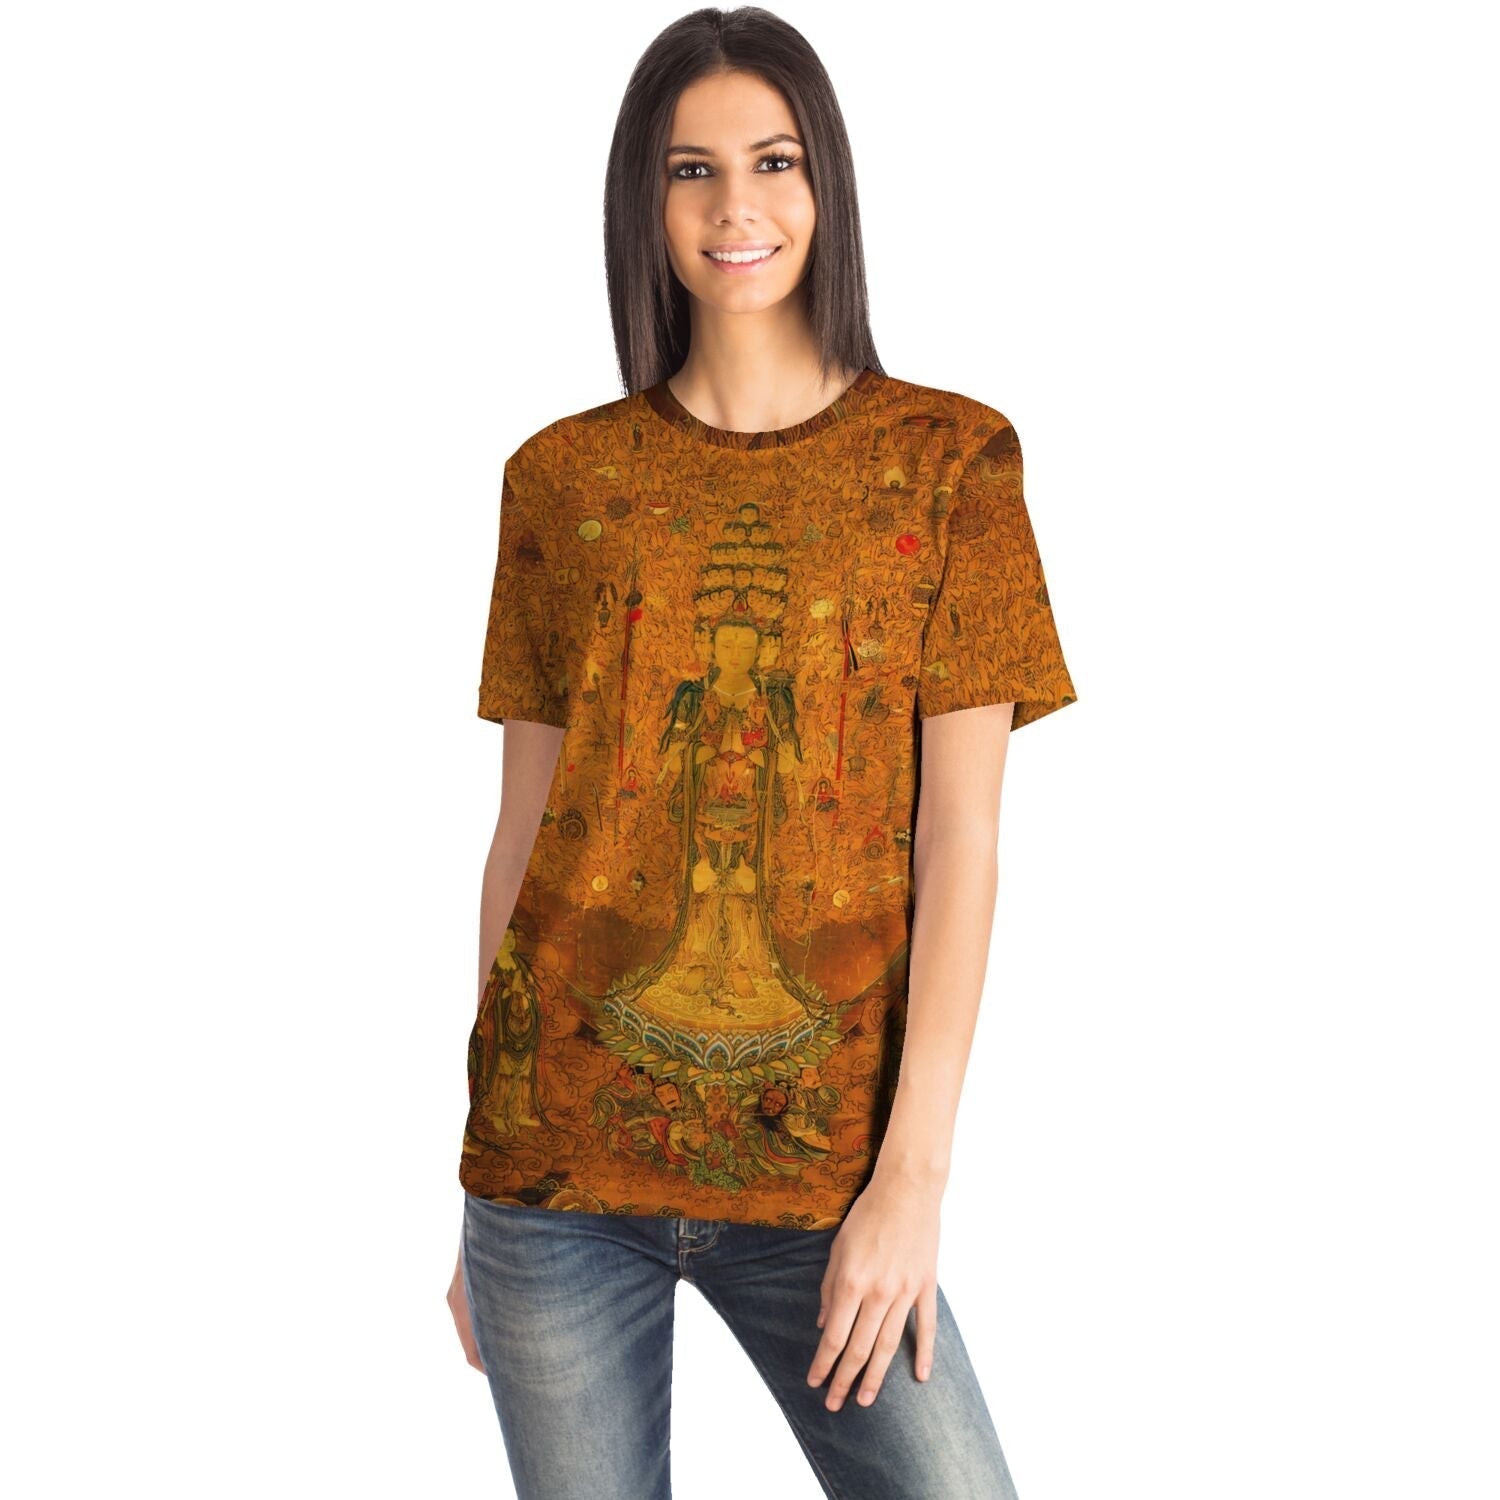 Guan Yin of a Thousand Arms and Eyes | Avalokiteshvara, Kannon | Buddhist Deity Graphic Art T-Shirt - Sacred Surreal